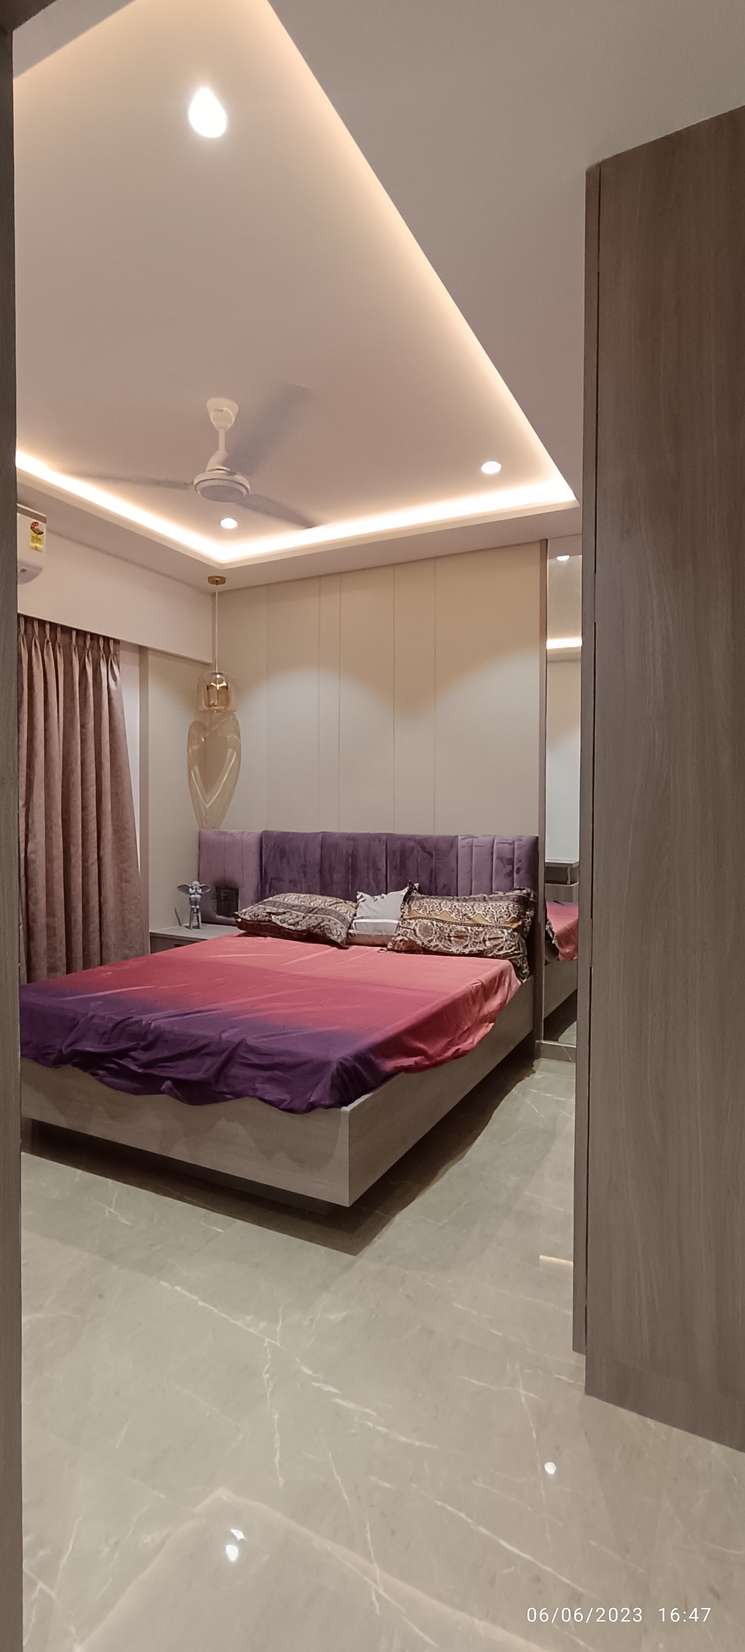 2 Bedroom 780 Sq.Ft. Apartment in Boisar Mumbai